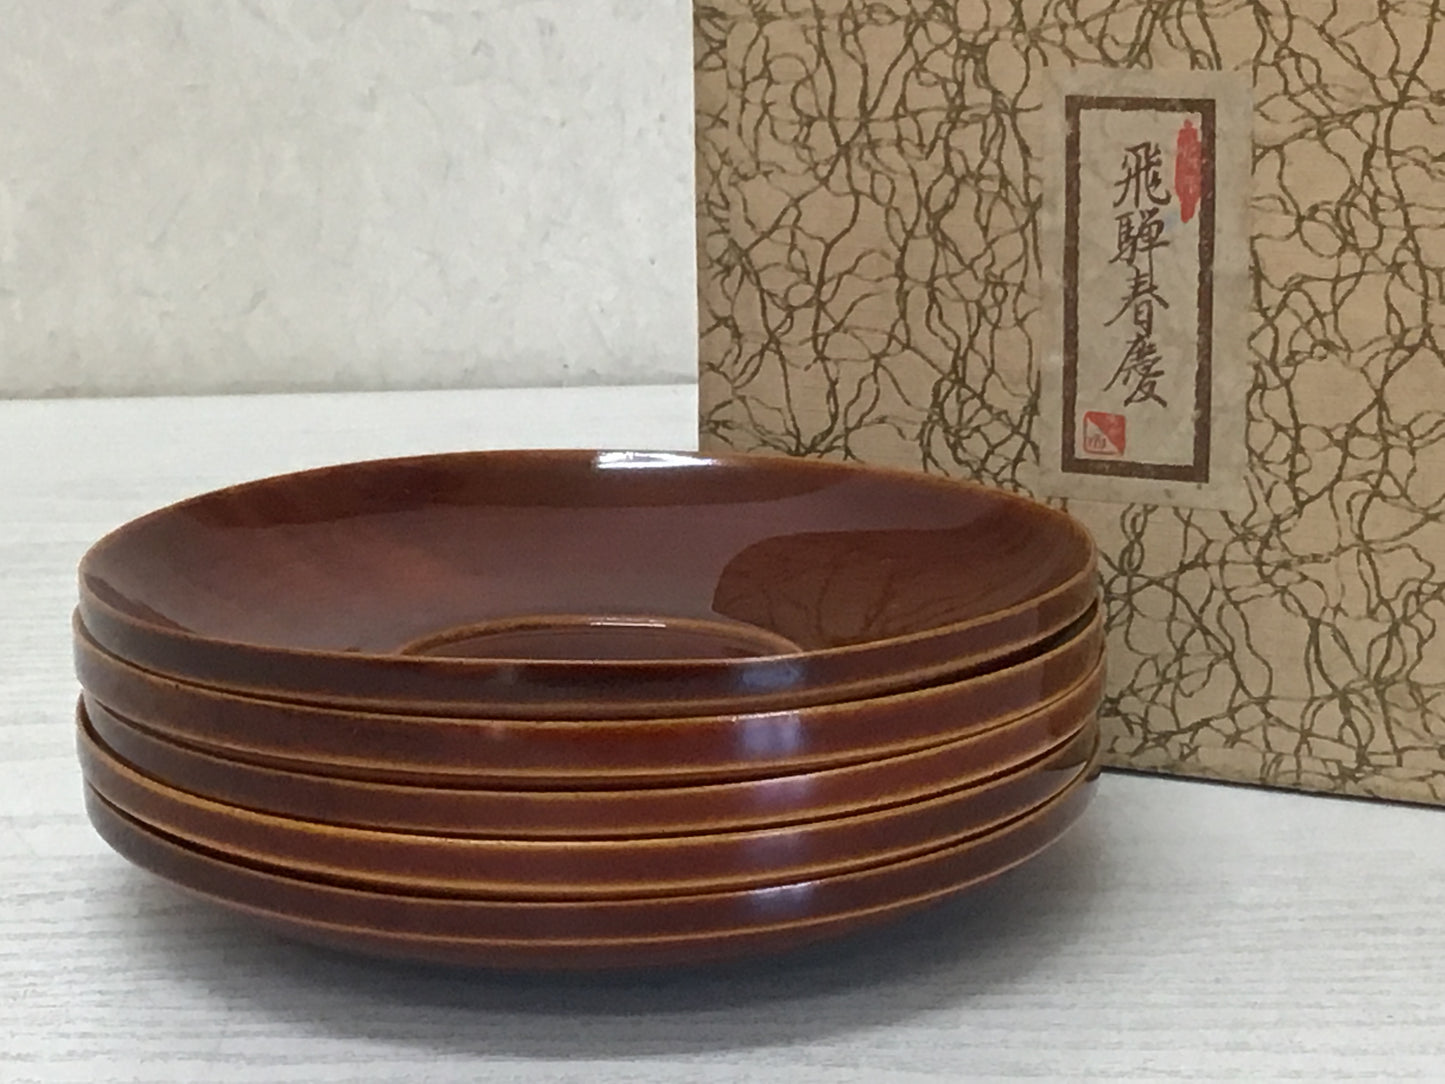 Y2004 DISH Shunkei Lacquerware Chataku Saucer Teacup Holder box Japanese antique